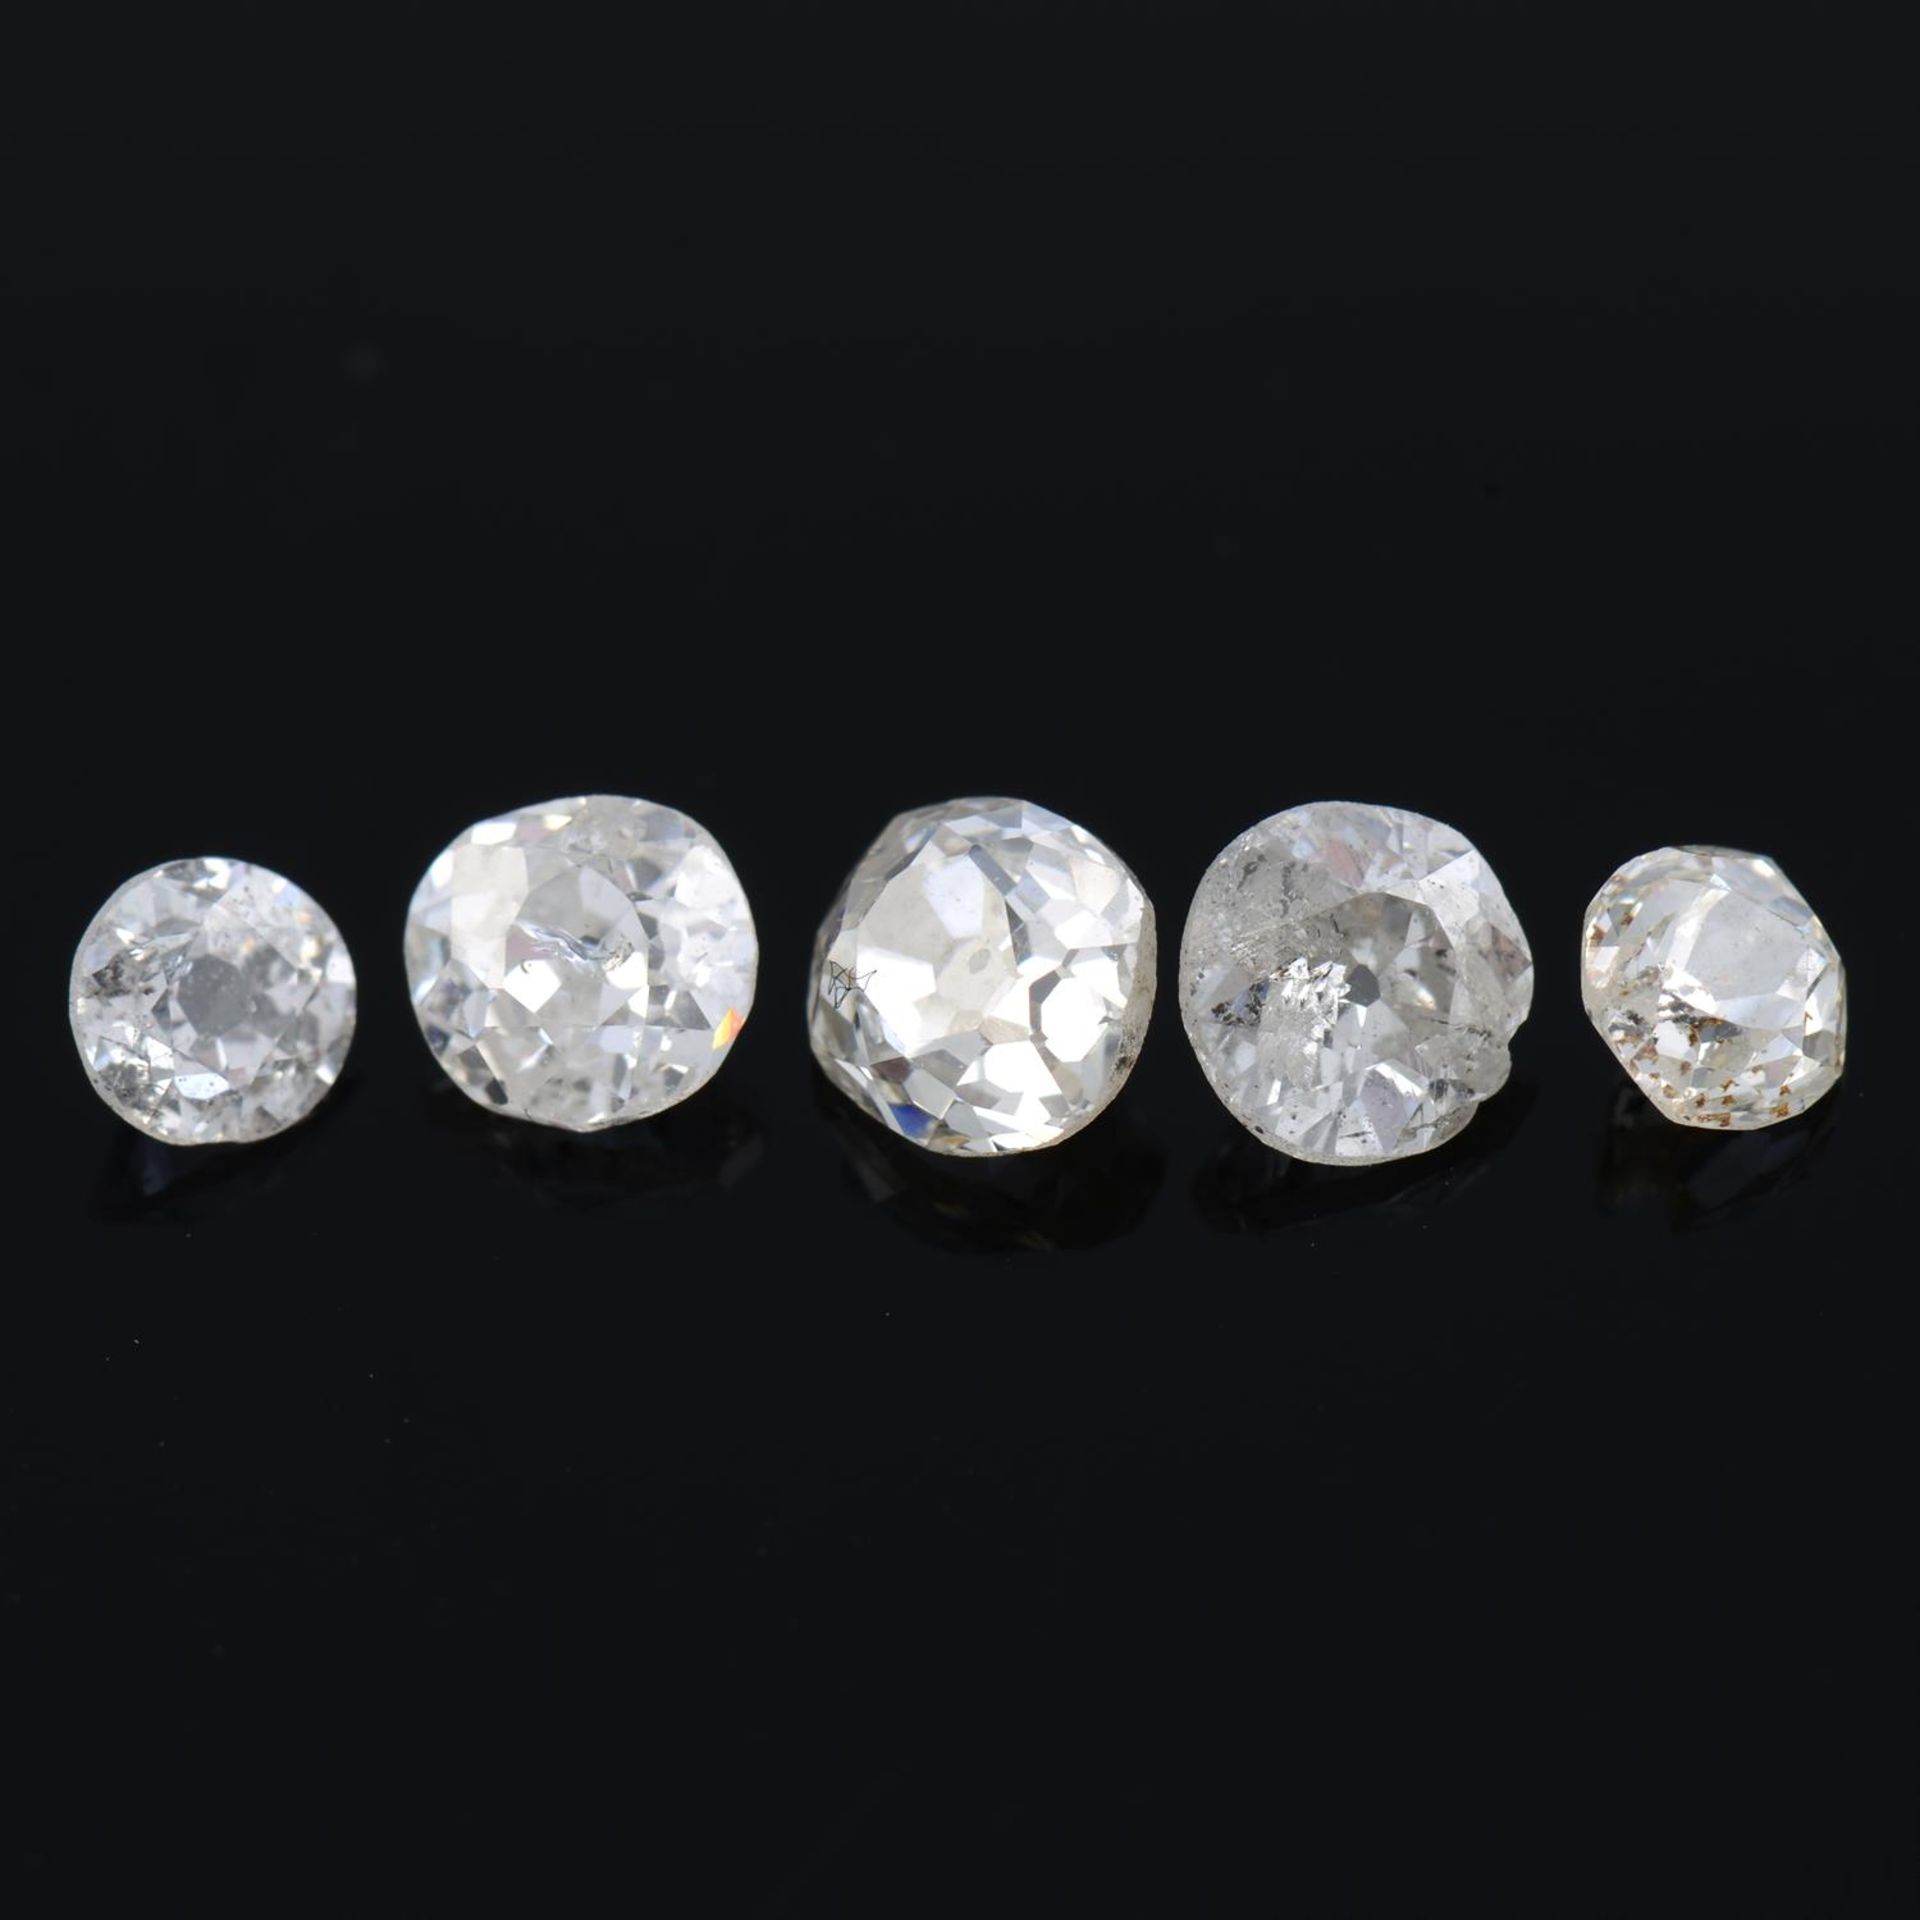 Five old-cut diamonds, 1.35ct